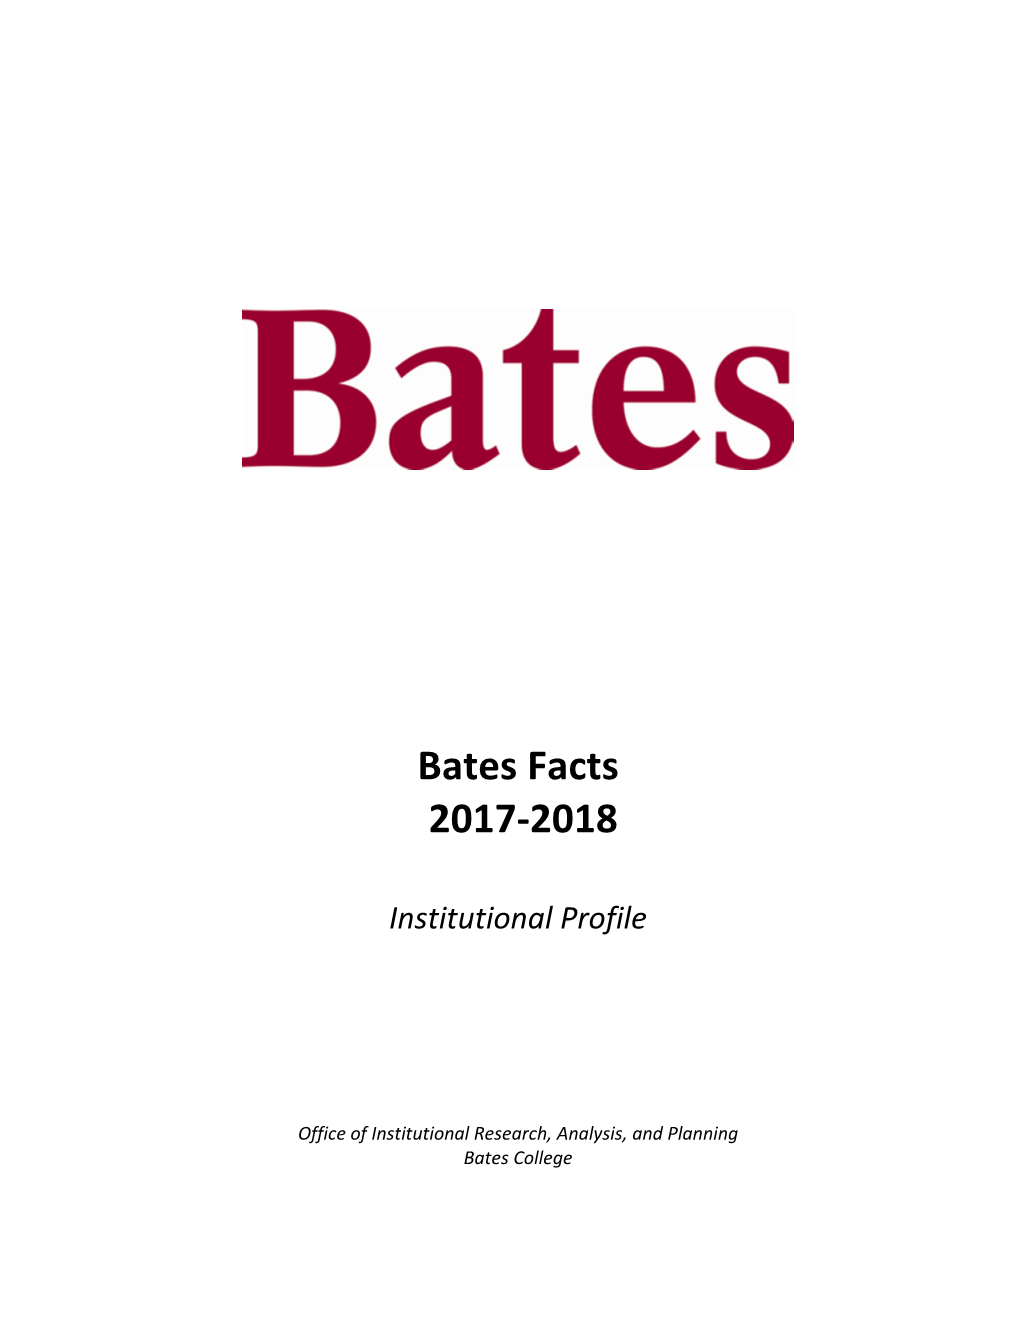 Bates Facts 2017-2018